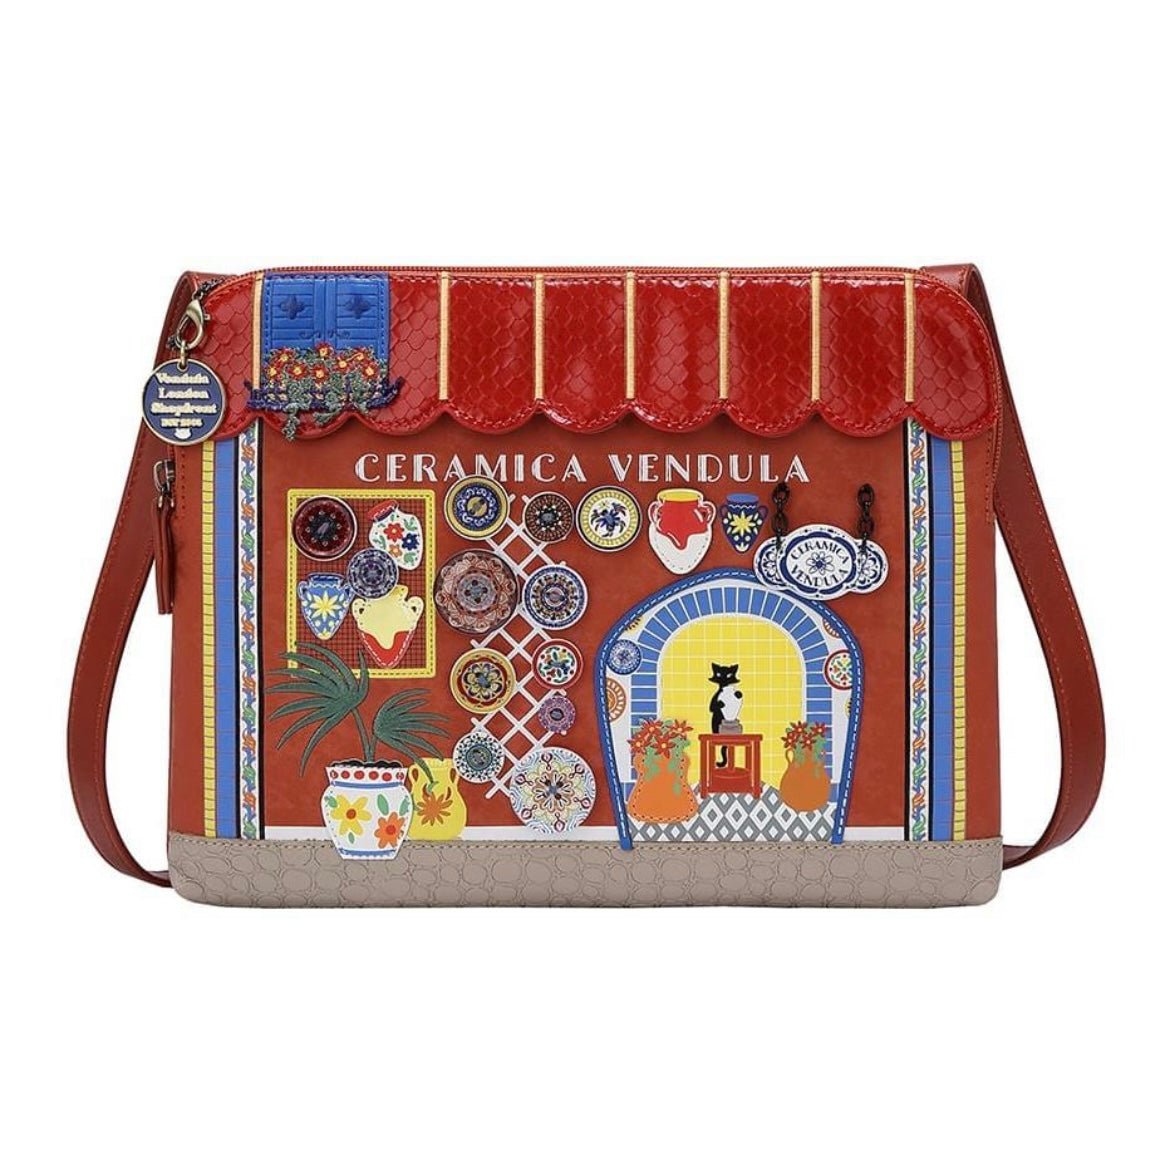 Ceramica Vendula Bella Bag - Rockamilly-Bags & Purses-Vintage